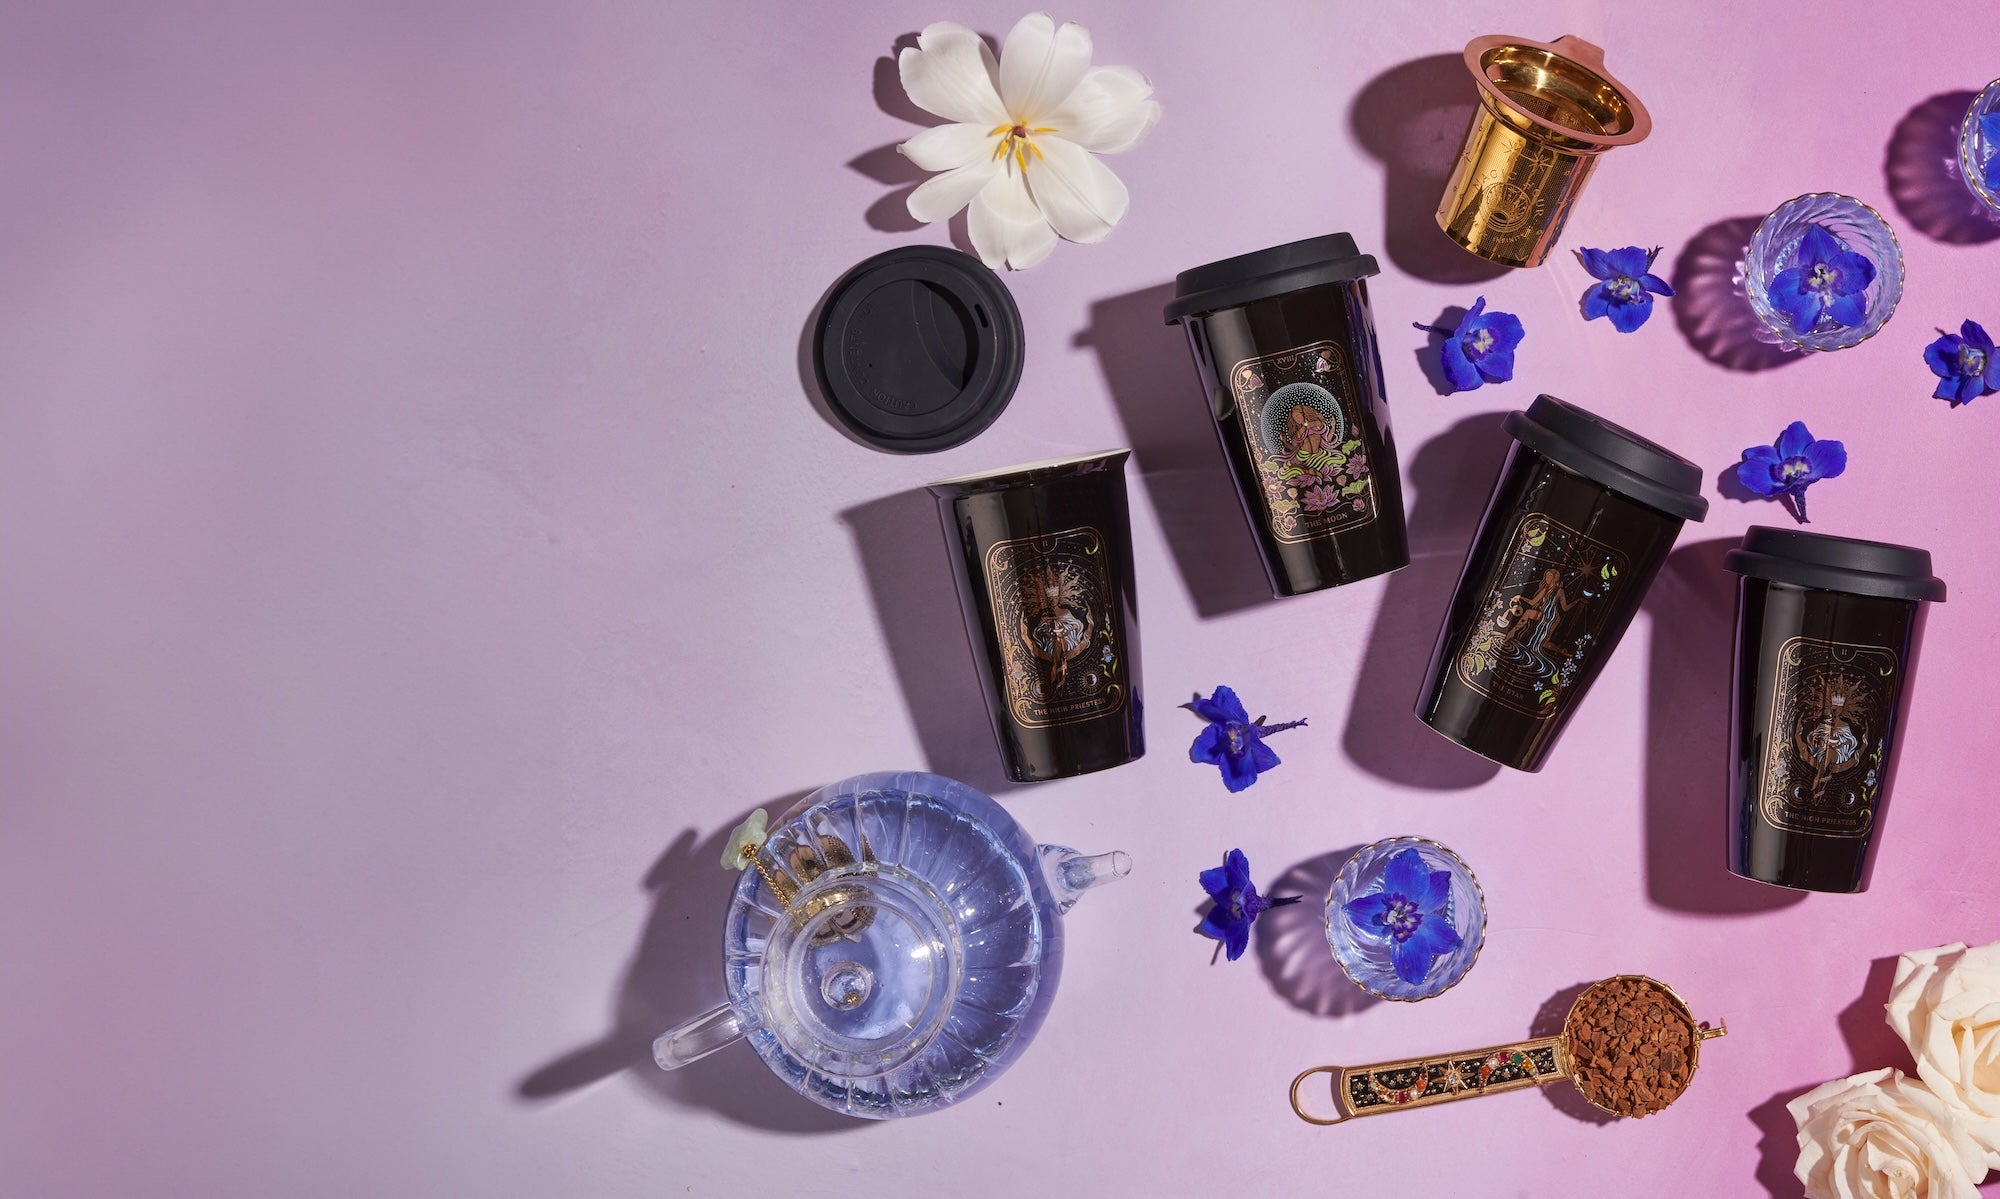 Magic Hour To Go Cups, Tarot, Tea Strainer, Blue Tea, Butterfly Pea Flower